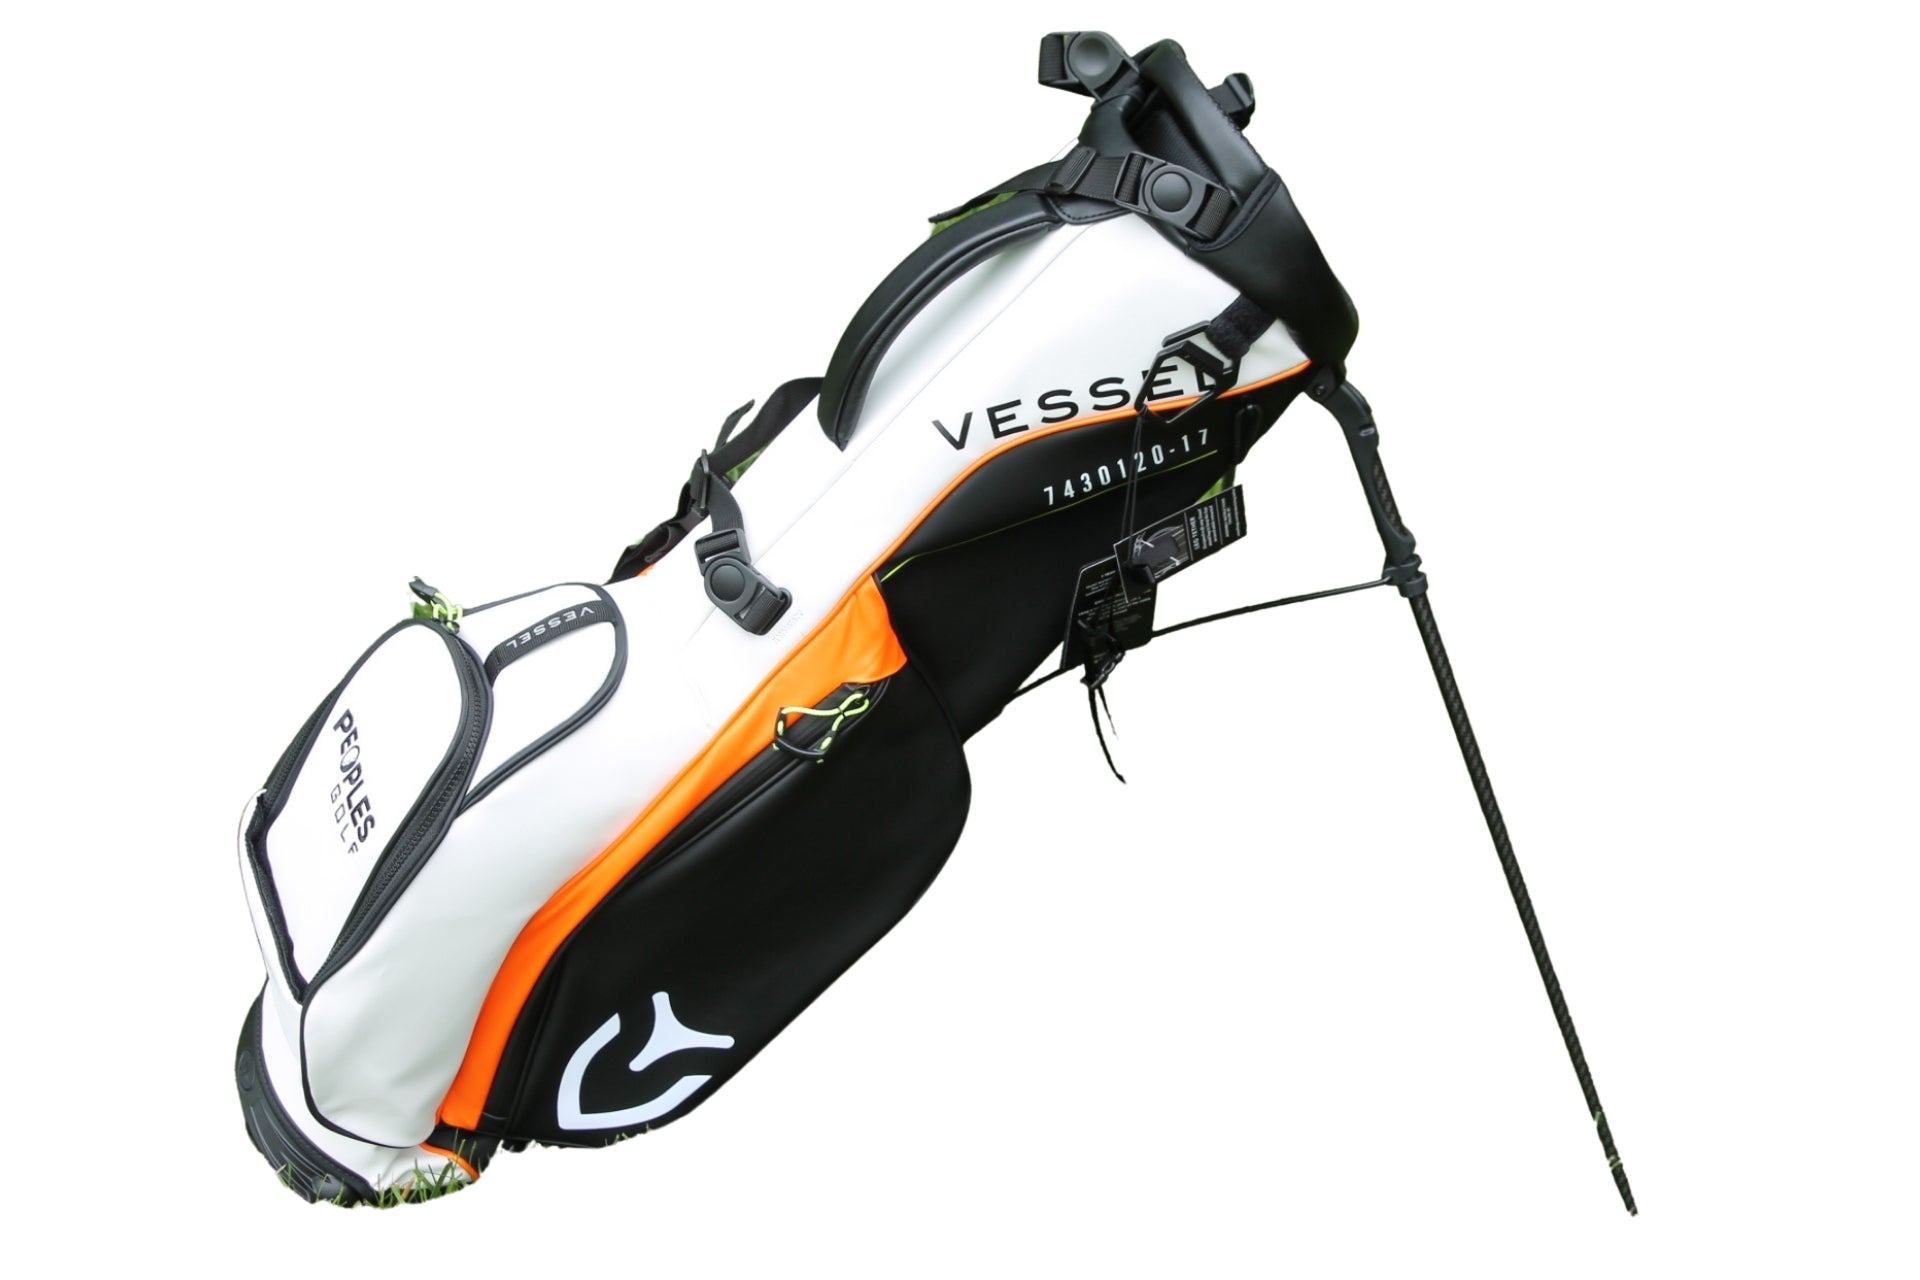 Peoples Golf Vessel VLX Stand Golf Bag